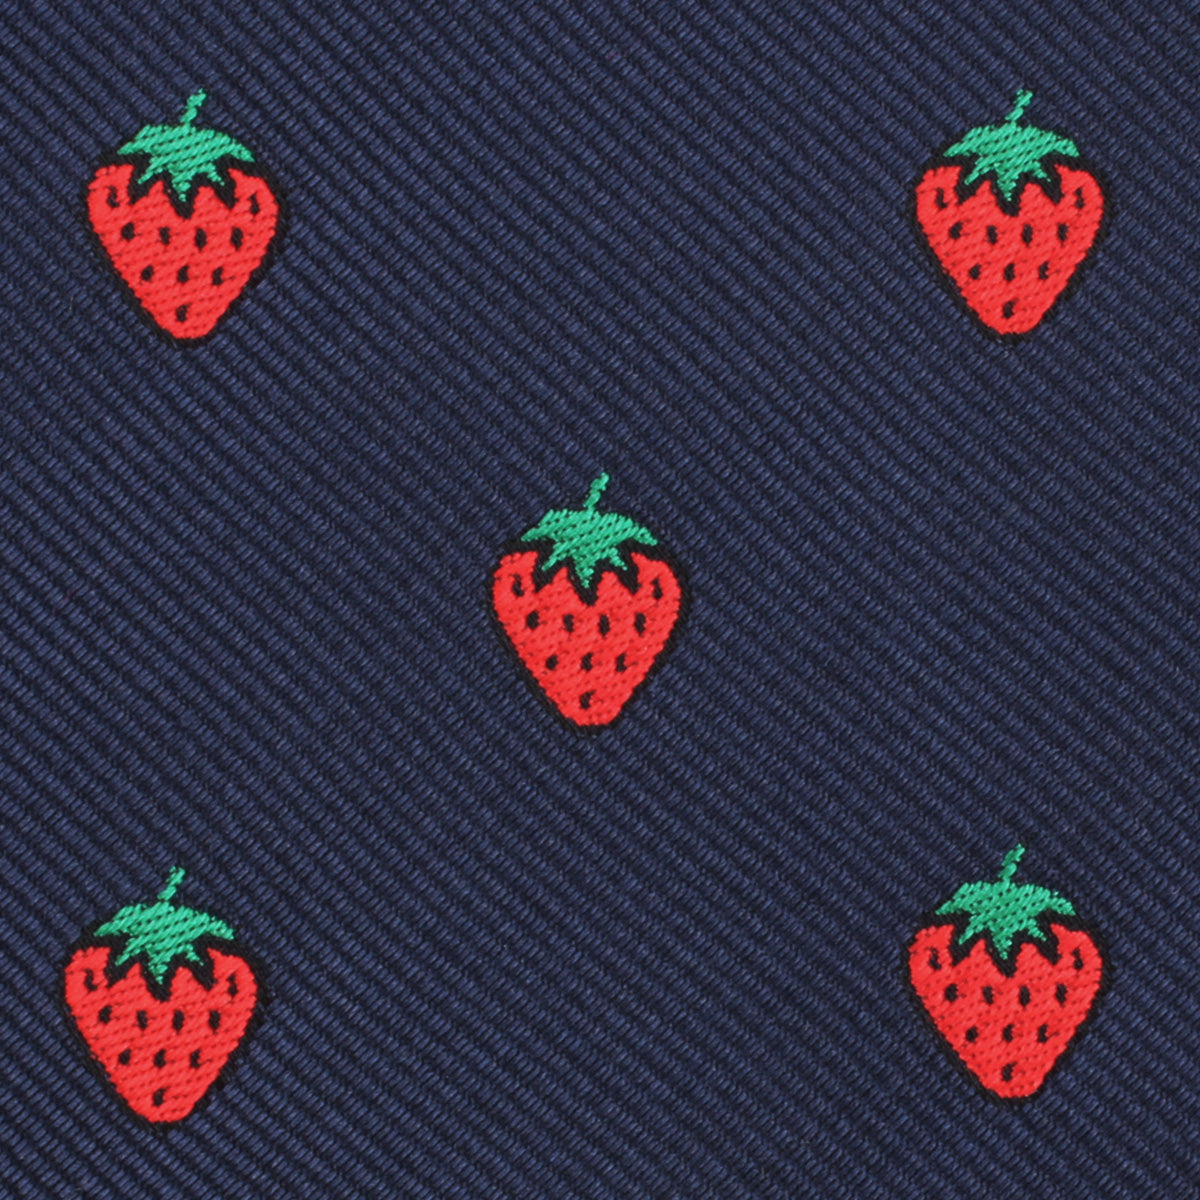 Strawberry Pocket Square Fabric